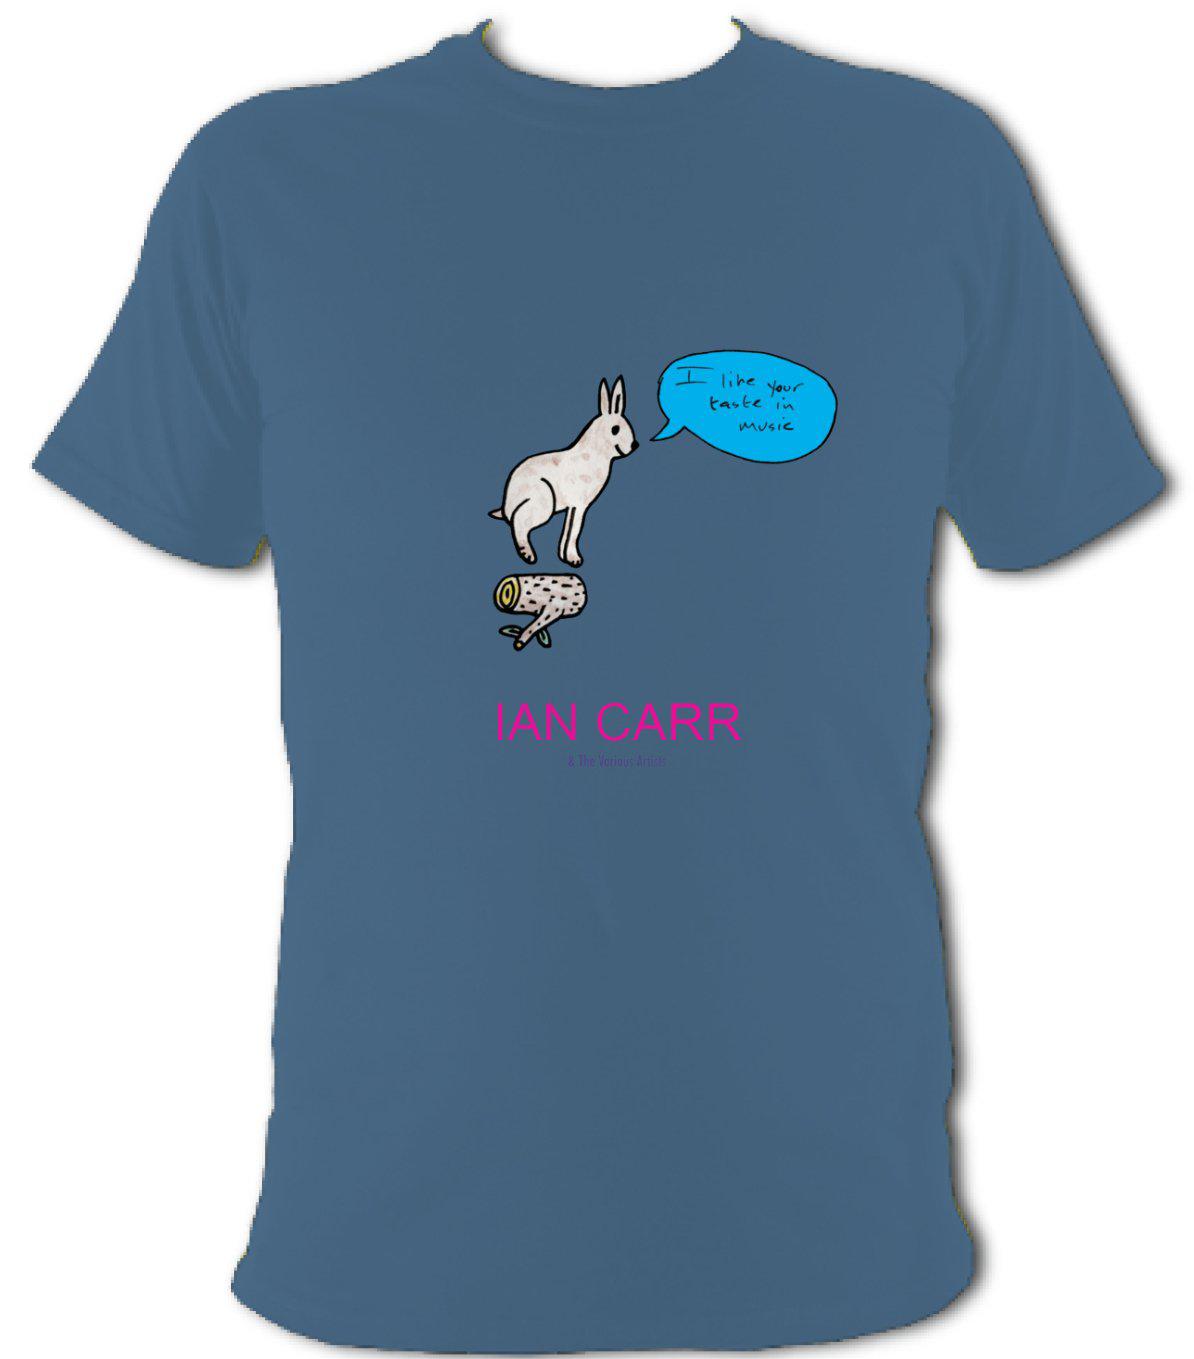 Ian Carr - "I like your taste in music" T-shirt